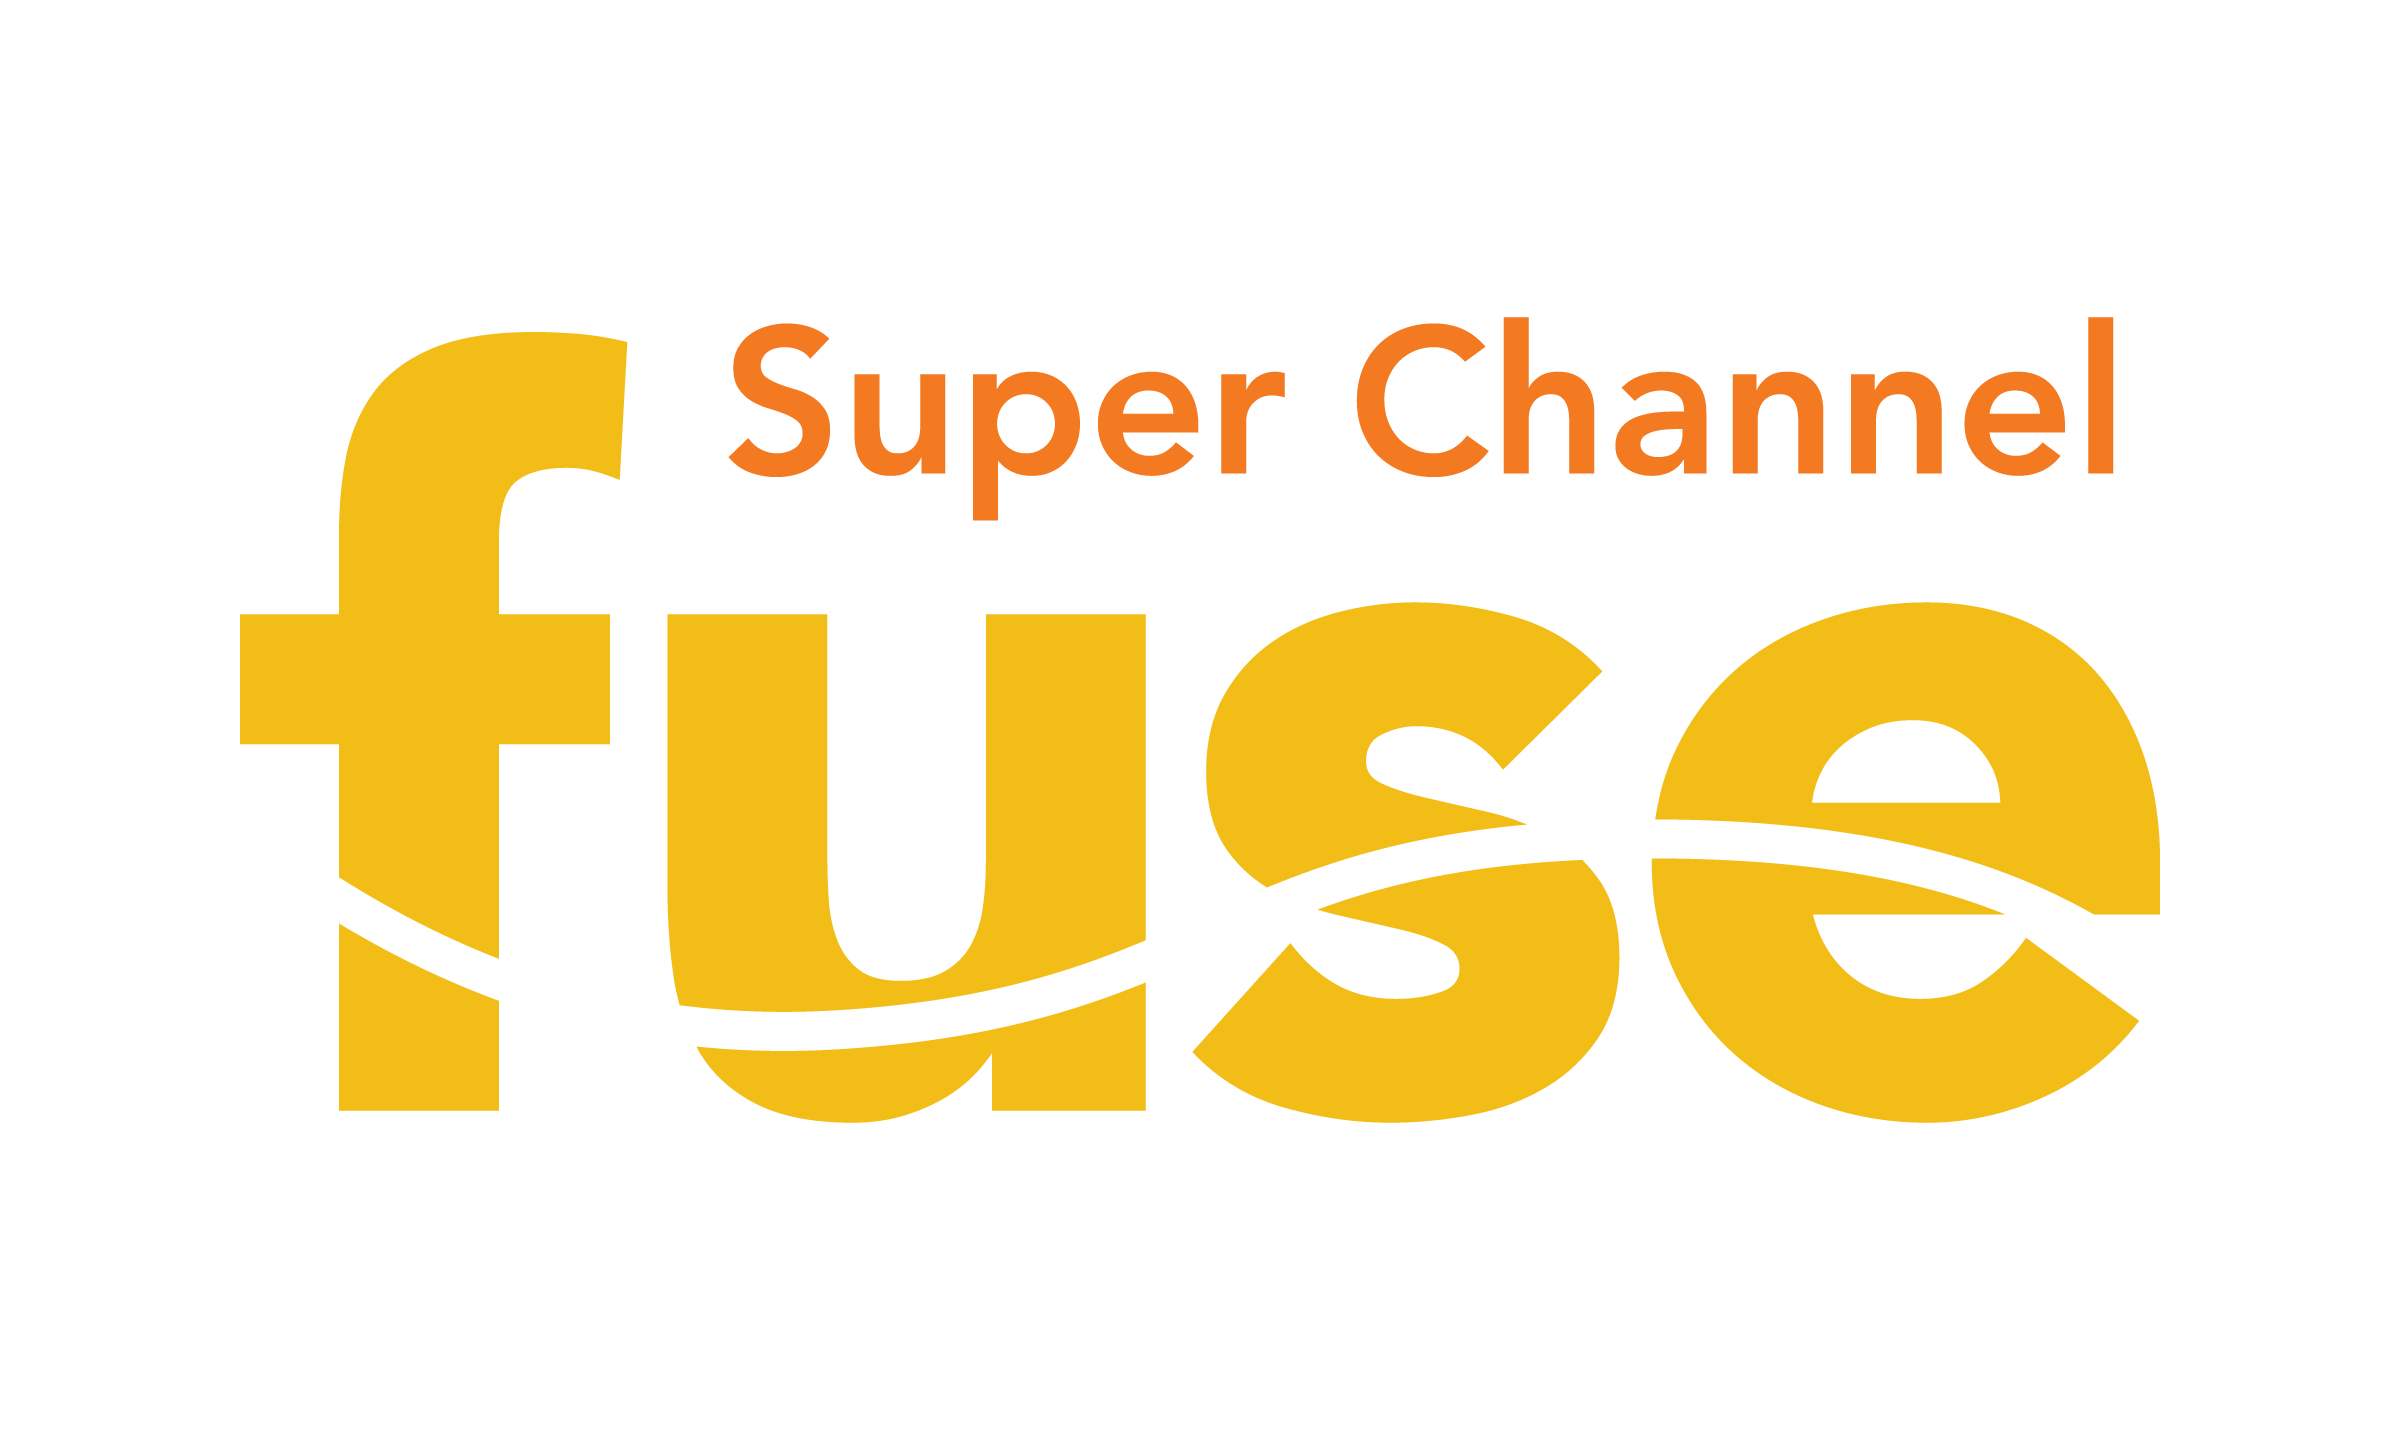 Super Channel Fuse logo